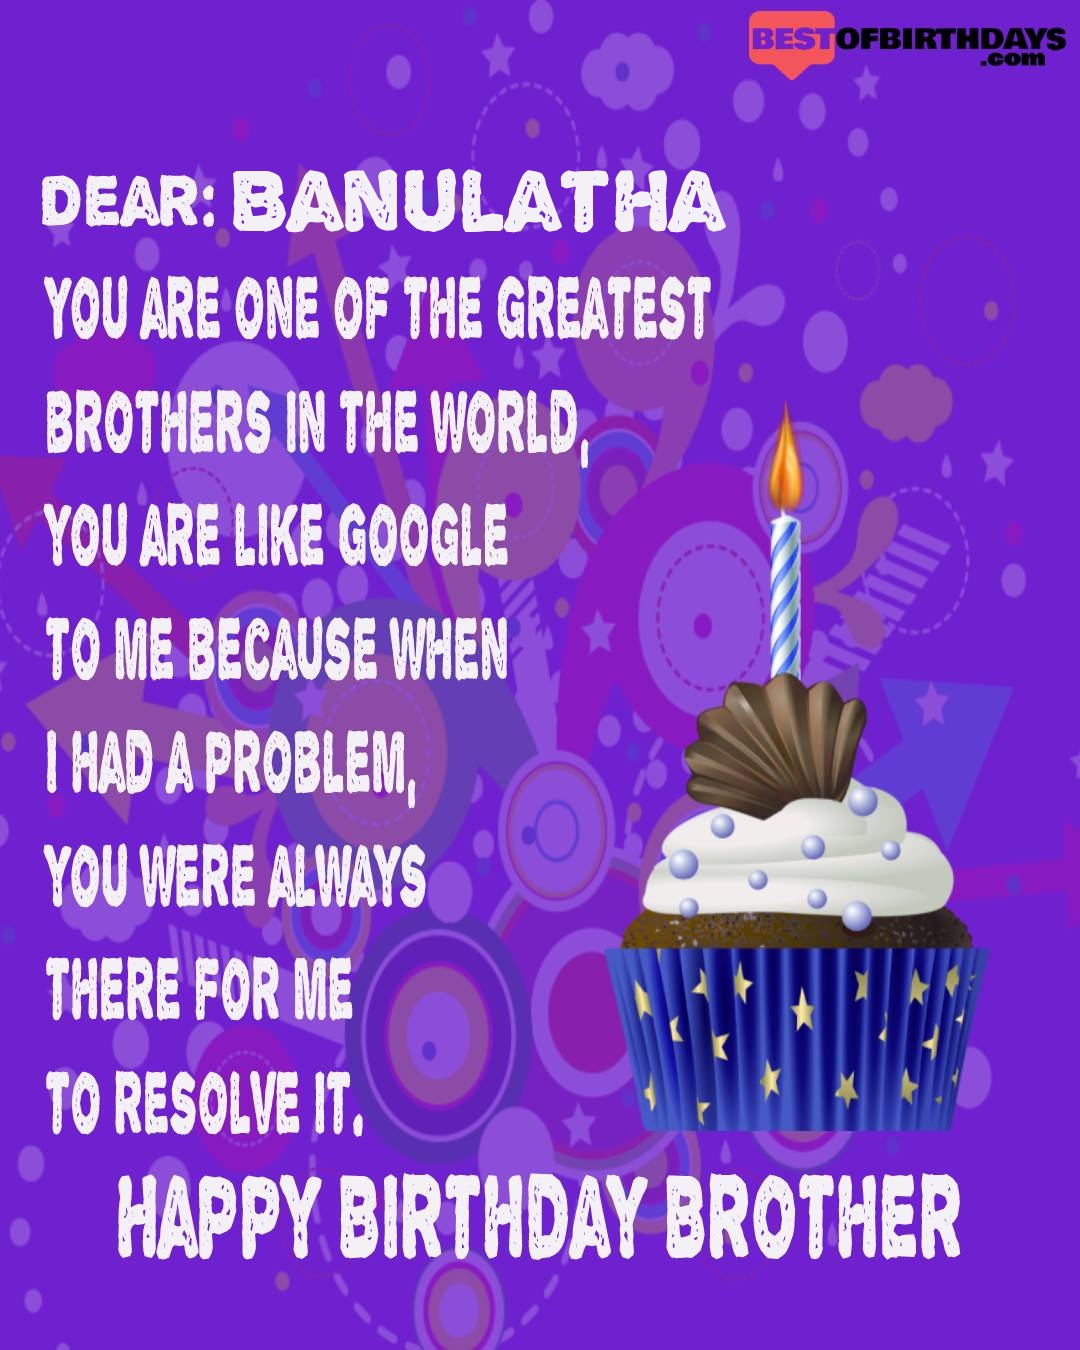 Happy birthday banulatha bhai brother bro